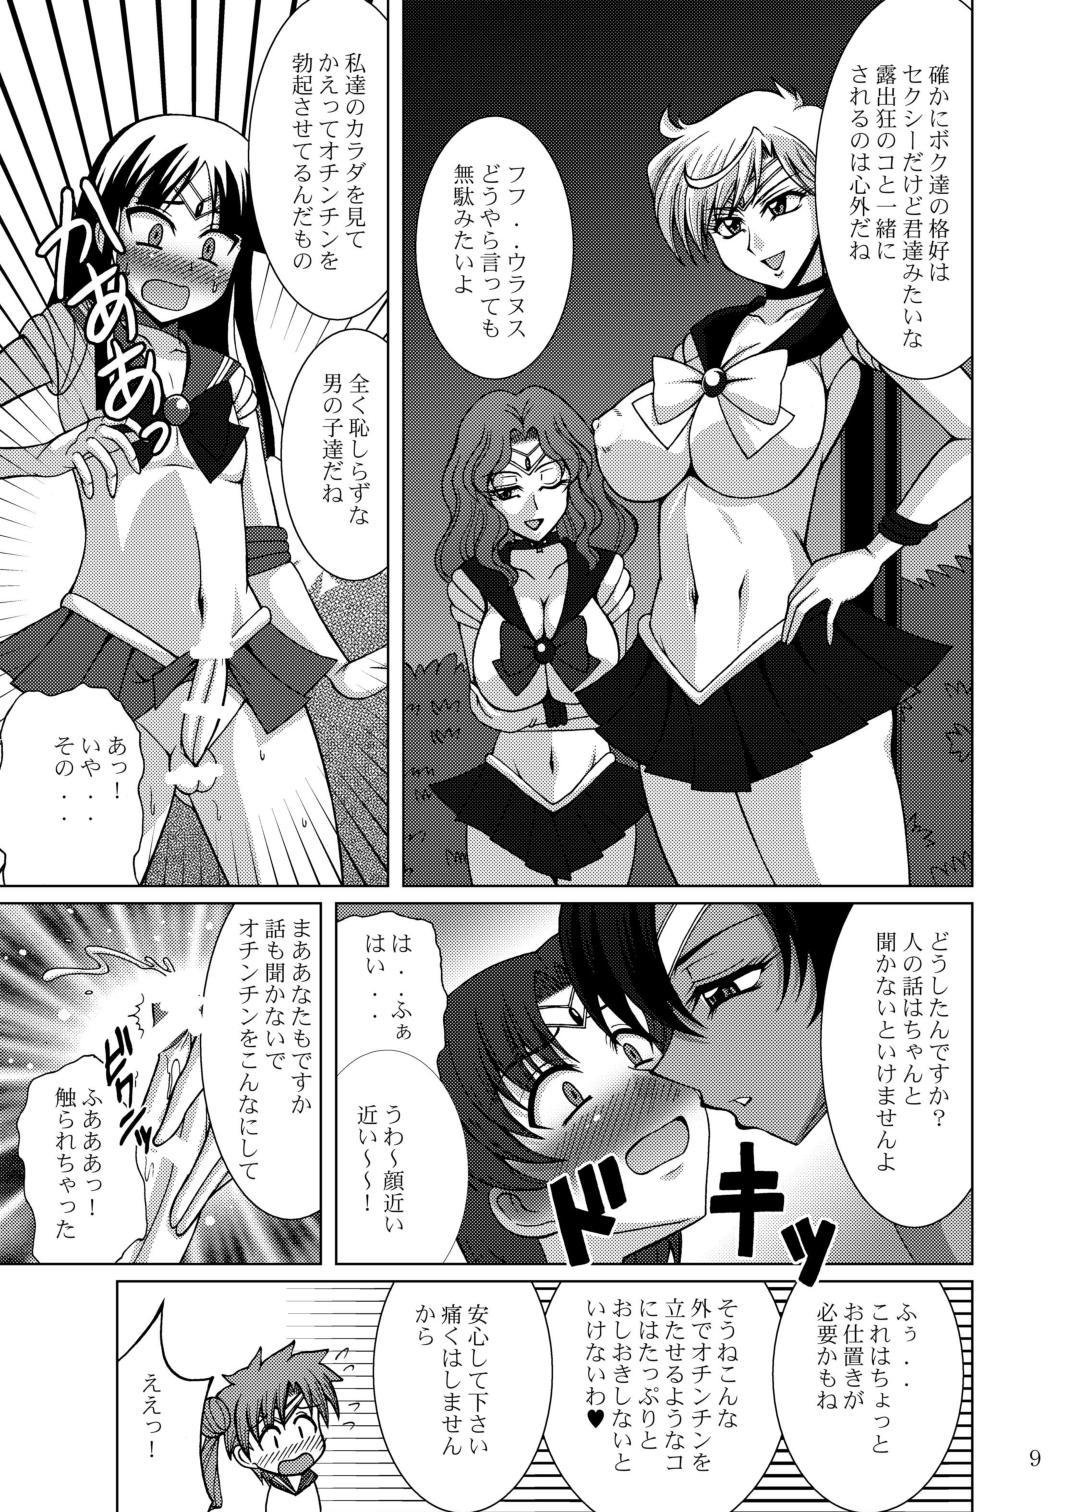 Spooning Sailor Fuku Josou Shounen Senshi vs Gaibu Taiyoukei San Senshi - Sailor moon Off - Page 9